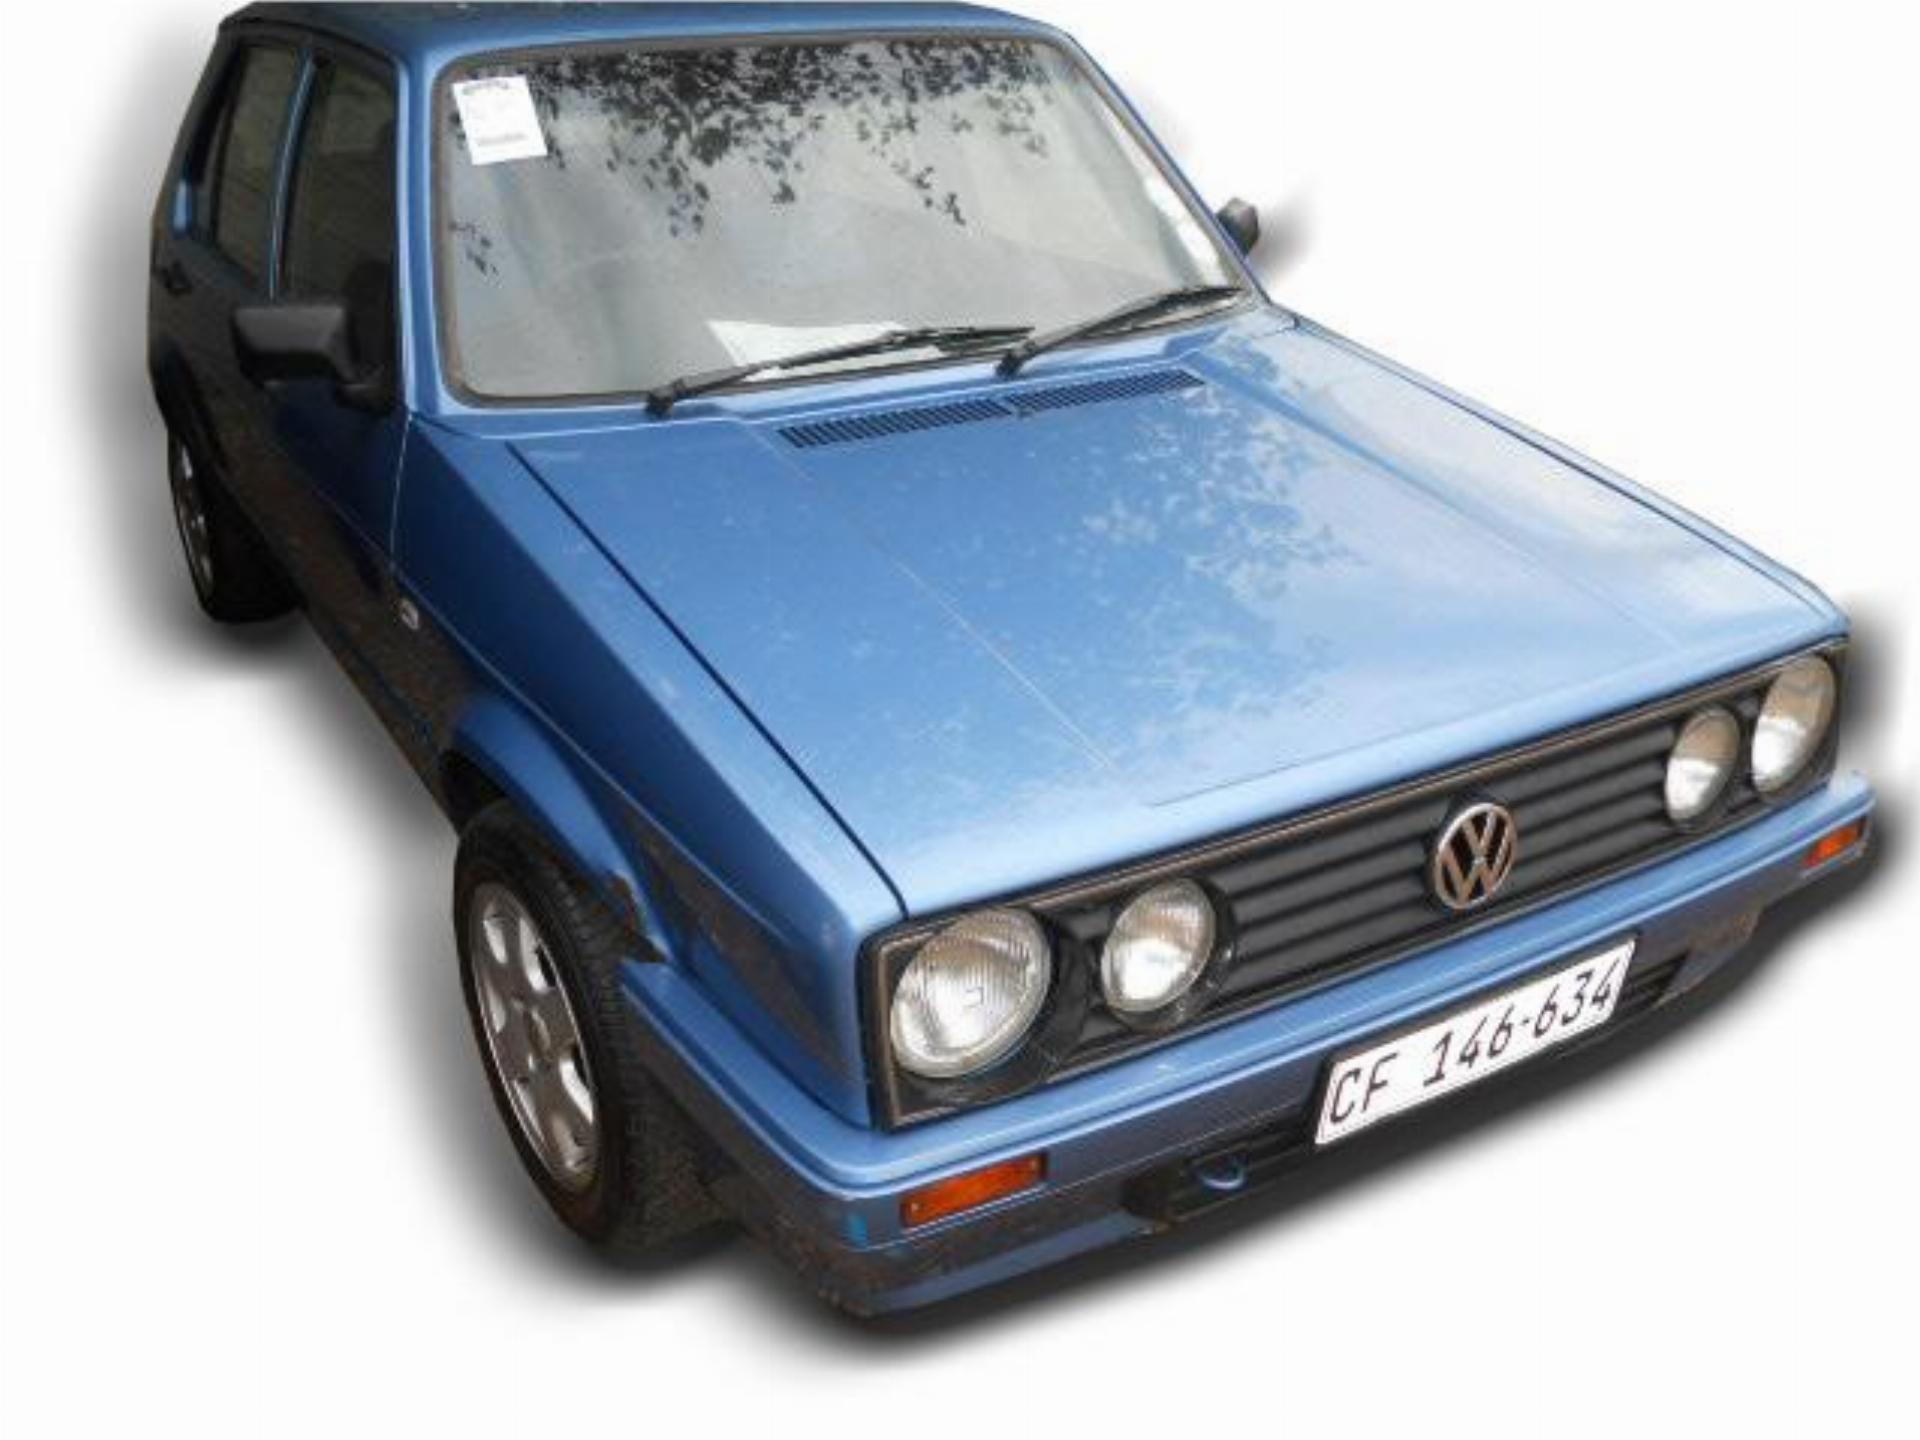 Volkswagen Citi Golf 1.4I